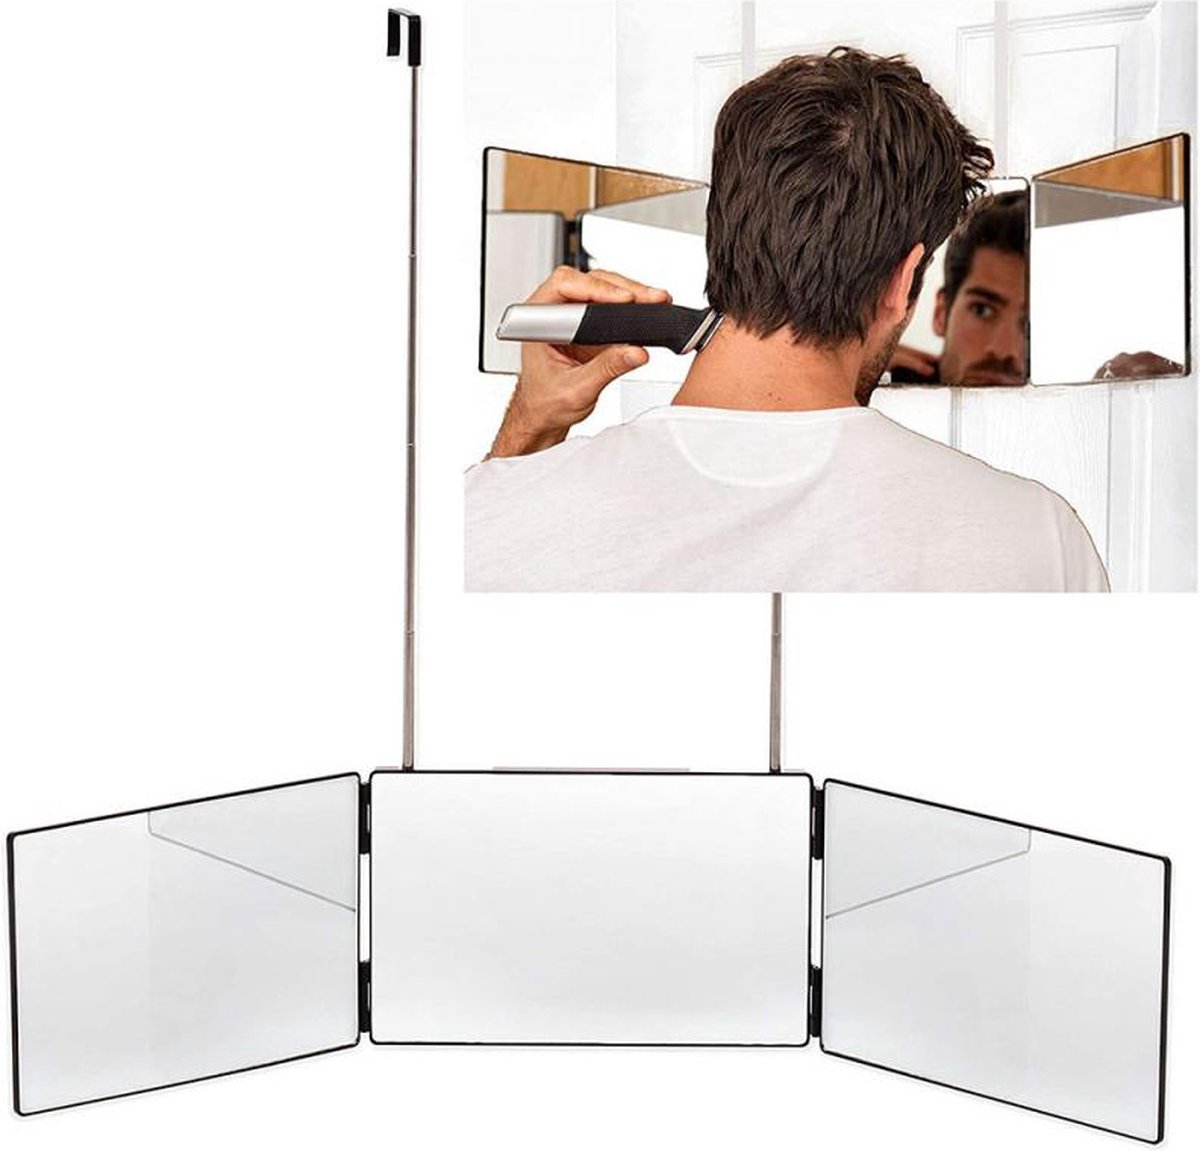 Multi Mirror - Make-up spiegel - Thuis Kapper Spiegel - Self cut spiegel - 360 - Hangend